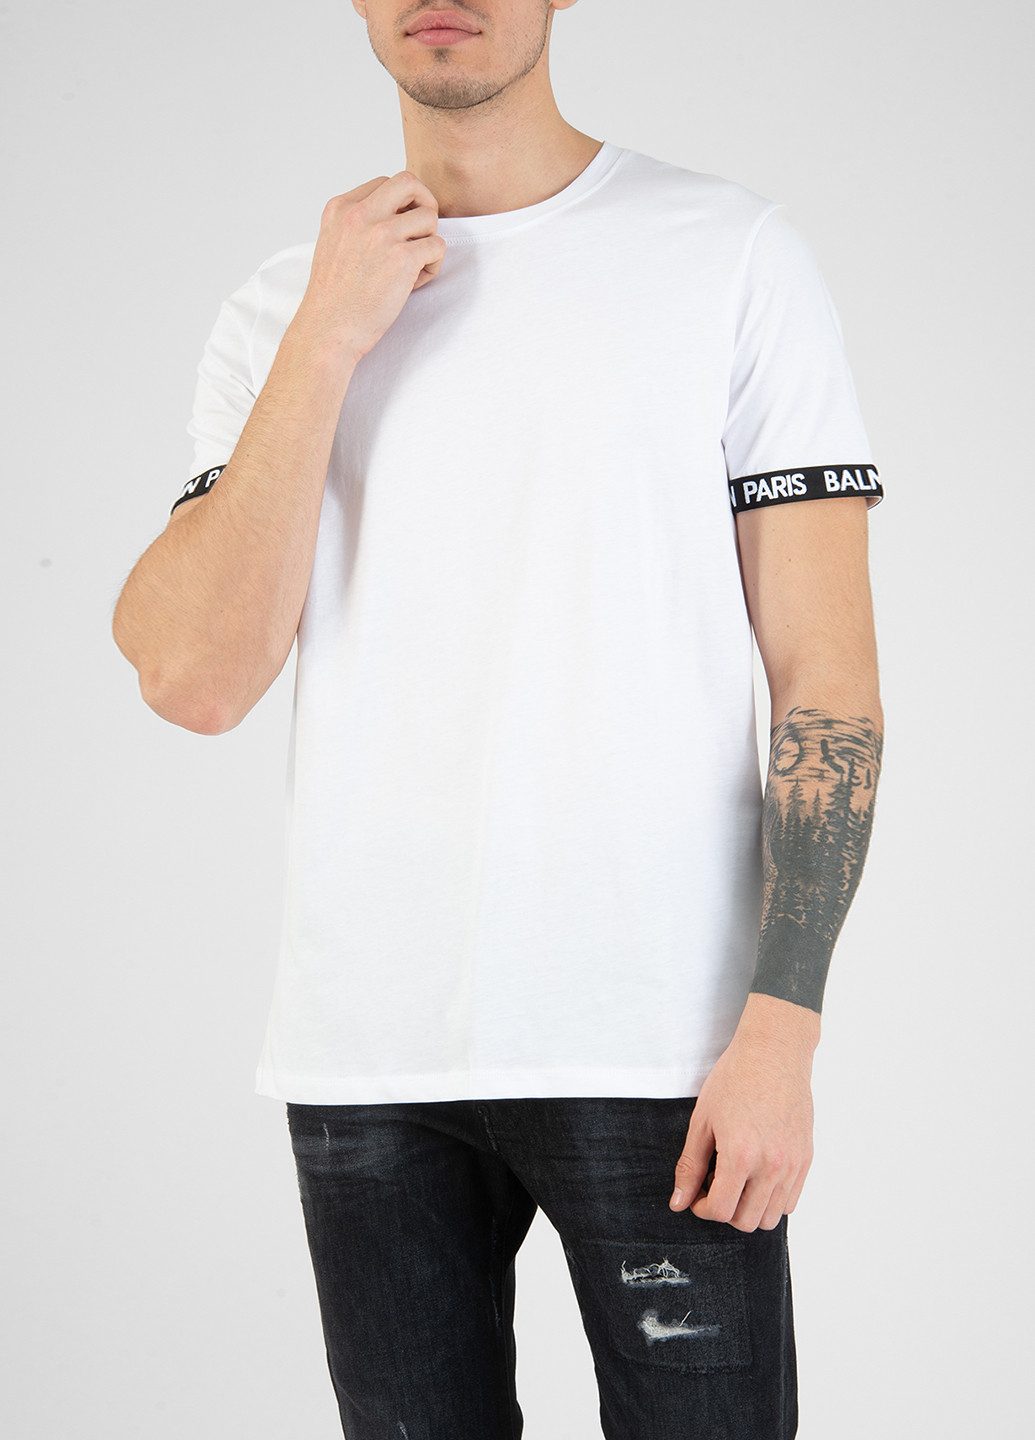 Белая футболка Balmain